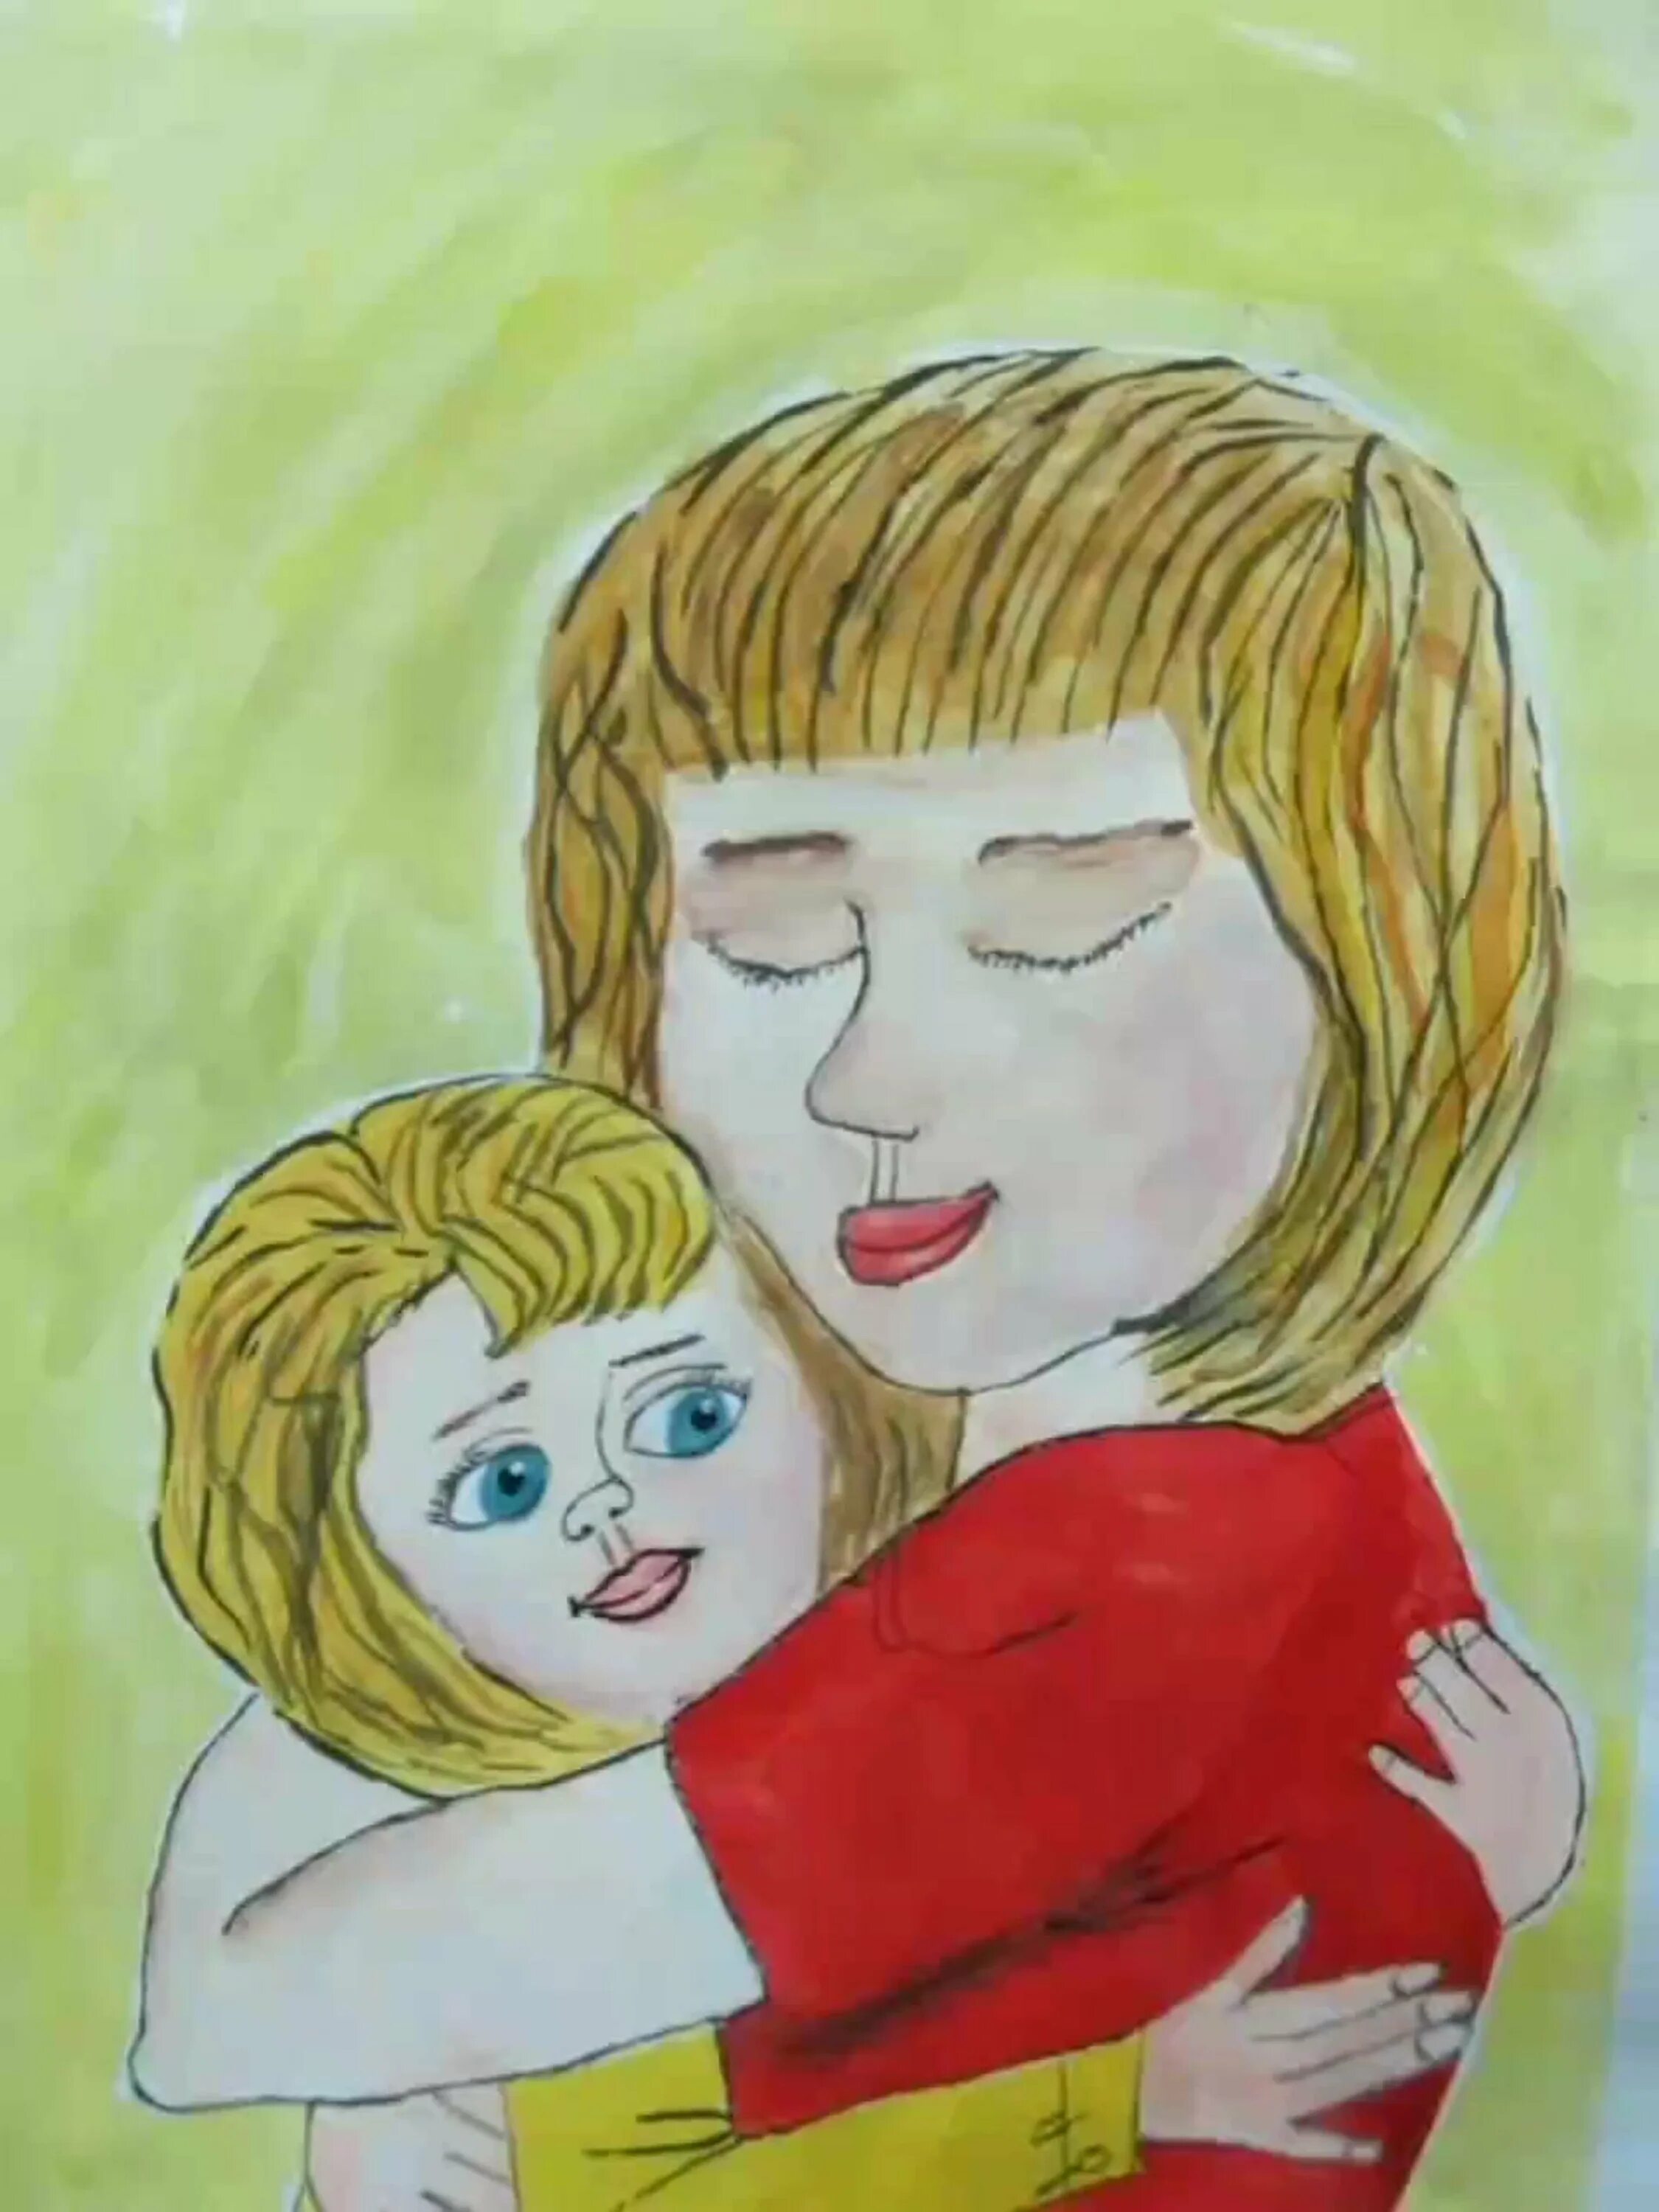 Мамина улыбка мамочка. Рисунок для мамы. Рисунок ко Дню матери. Рисунок на тему день матери. Рисунок на тему материнство.